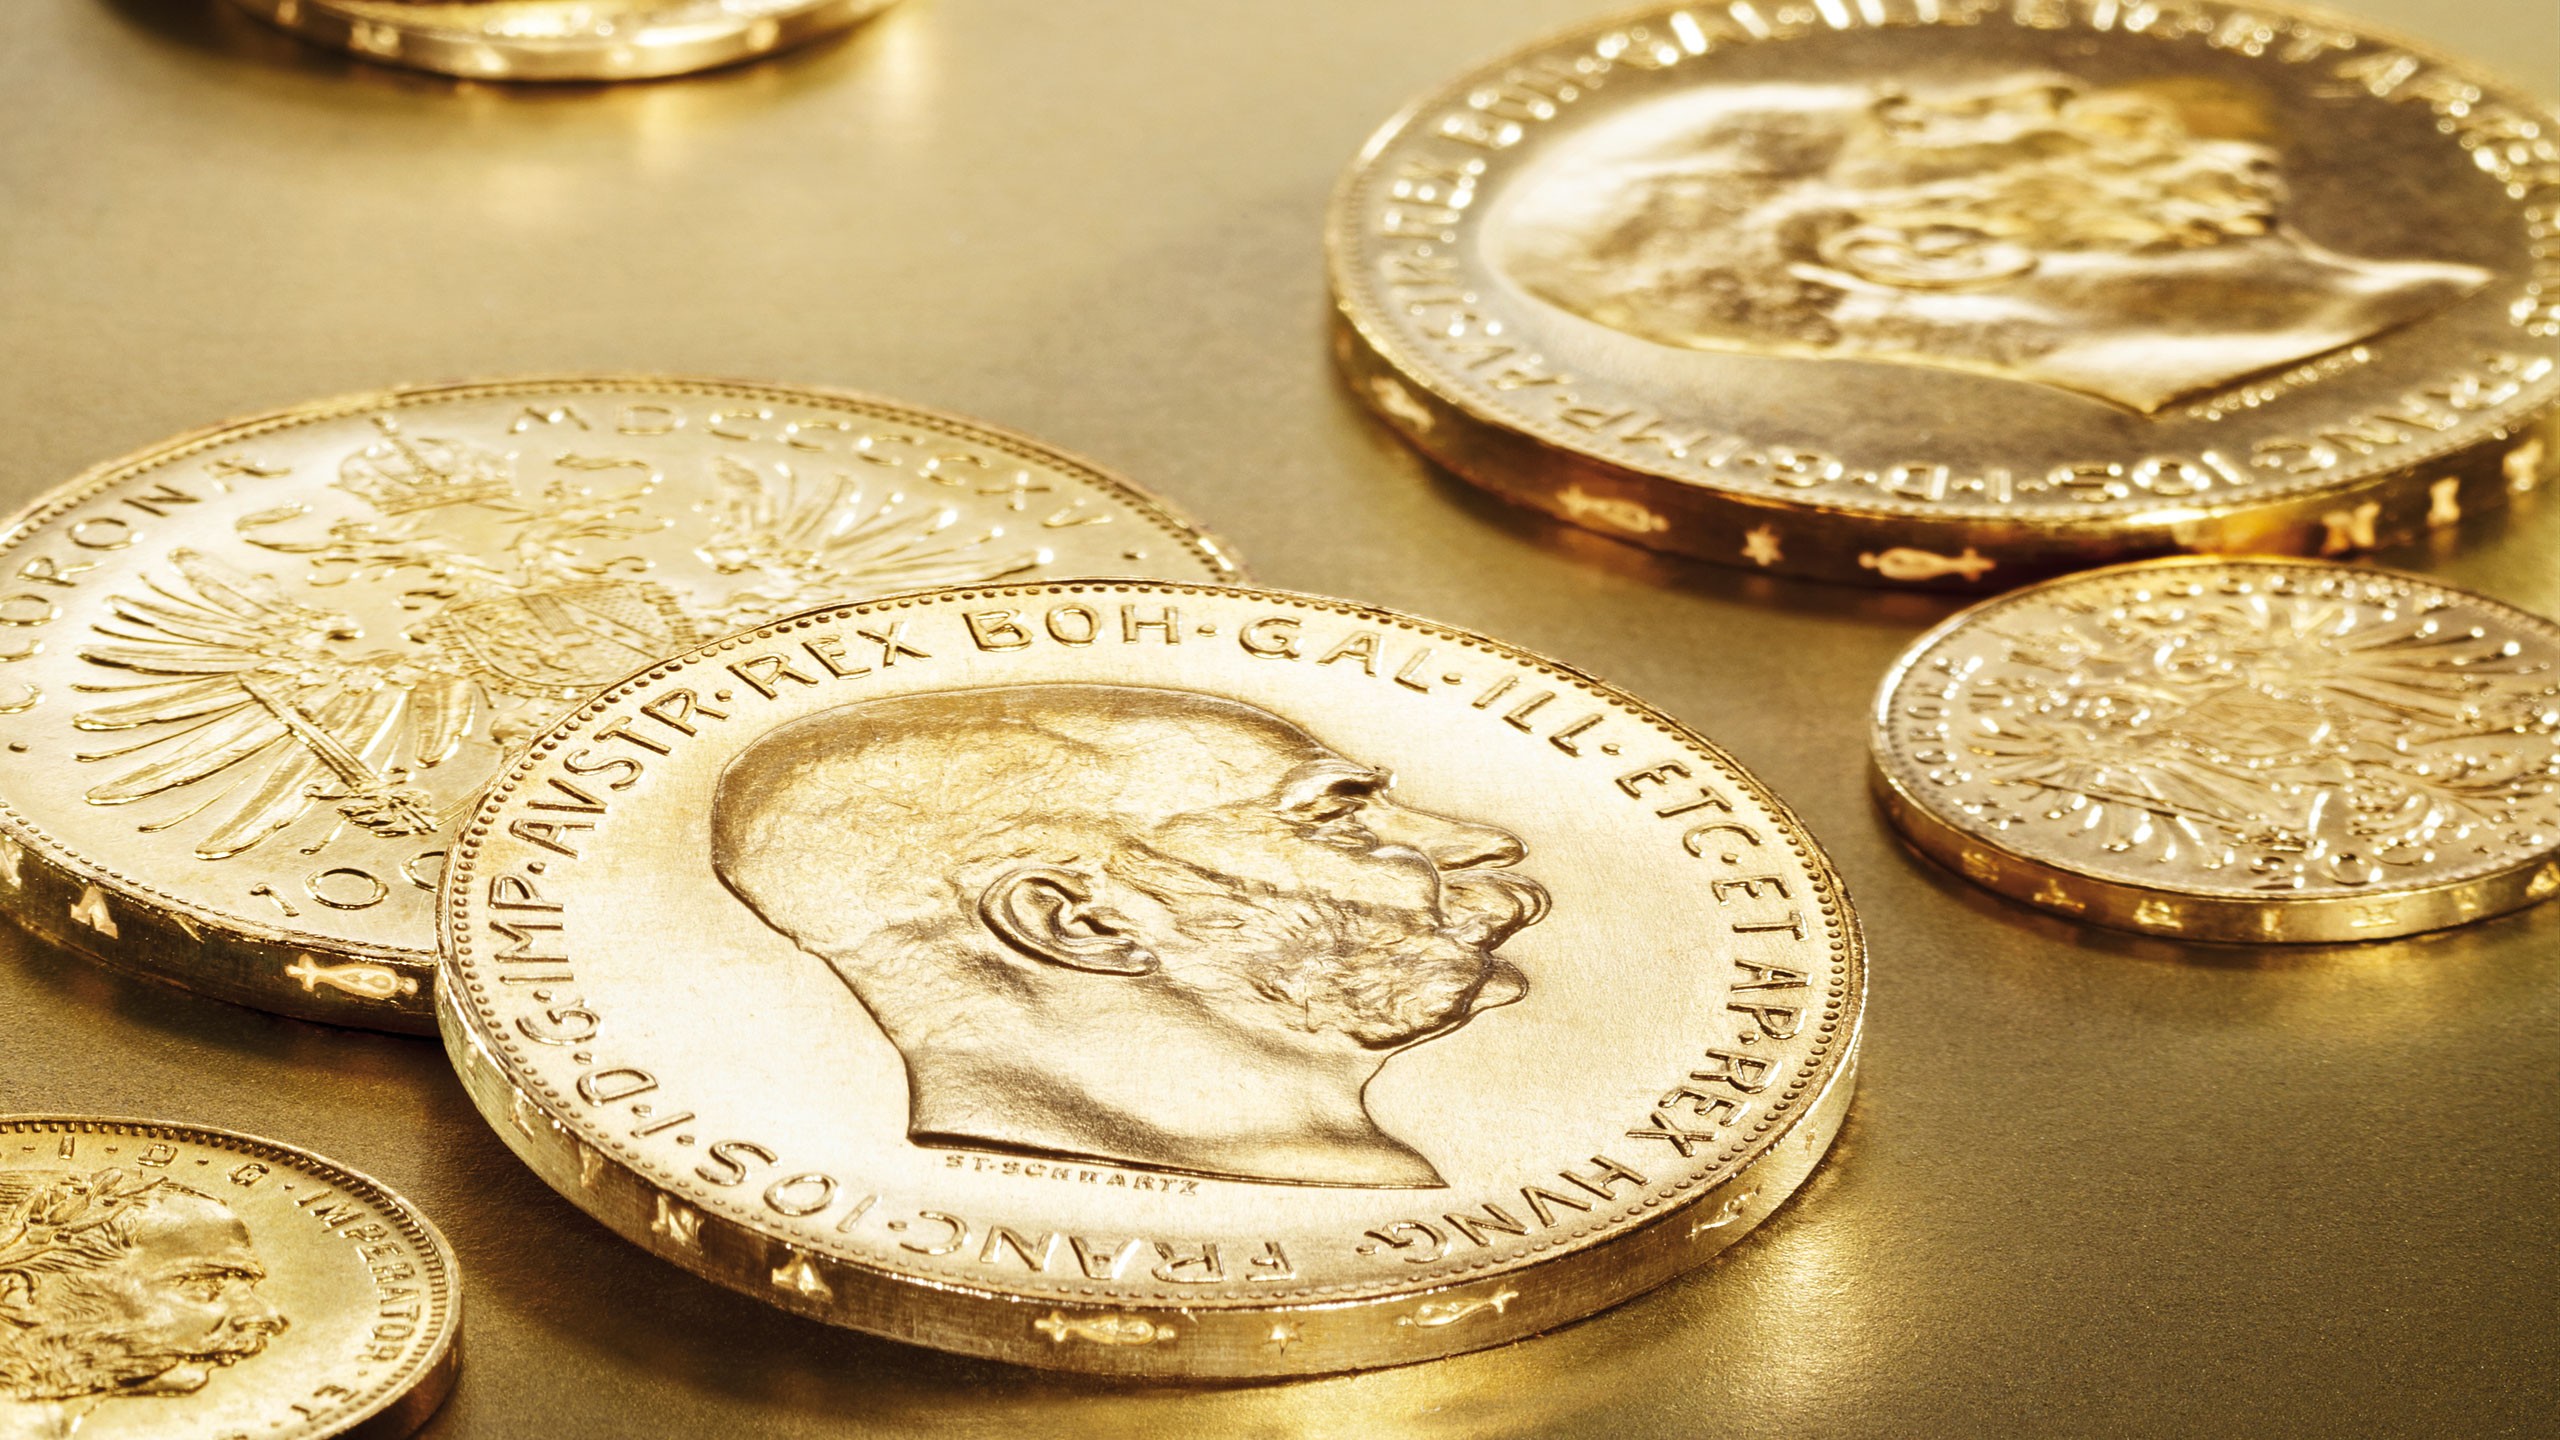 various bullion coins in gold